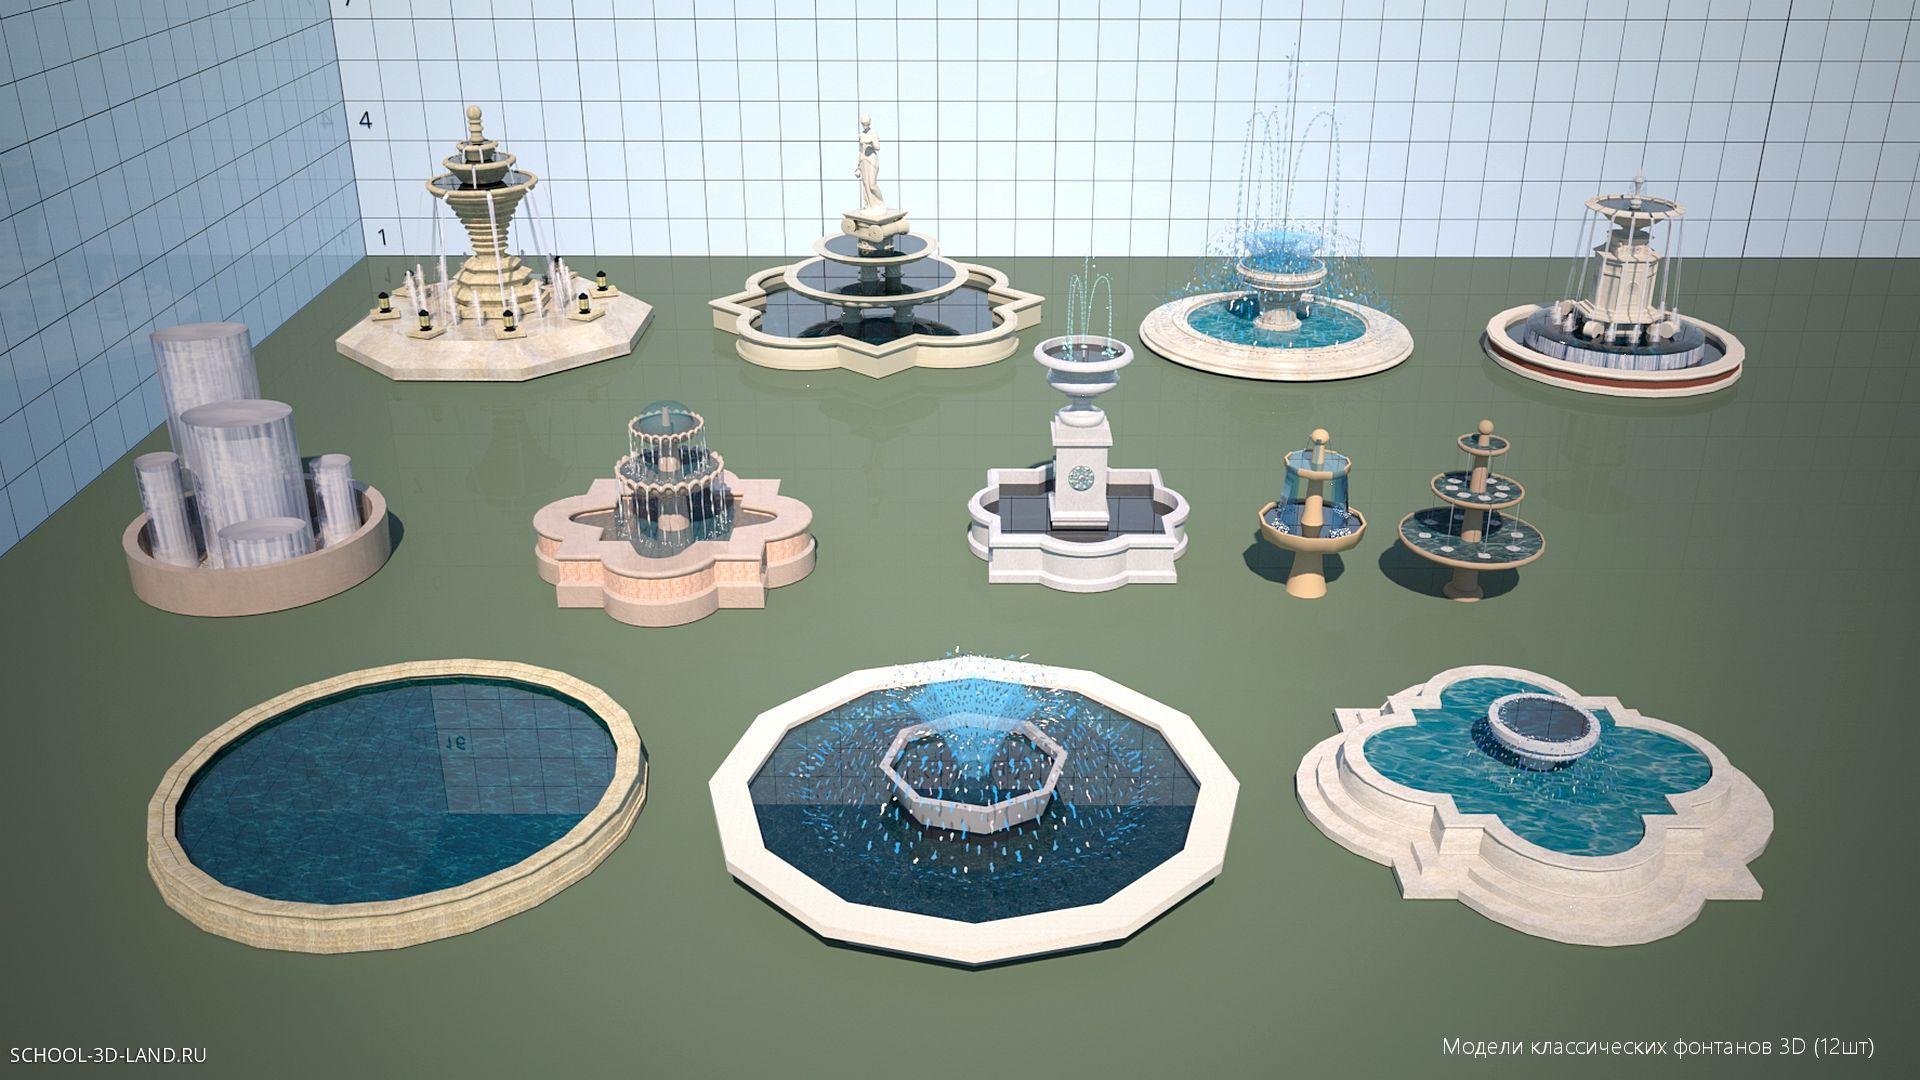 Models of classical fountains 3D (12pcs)